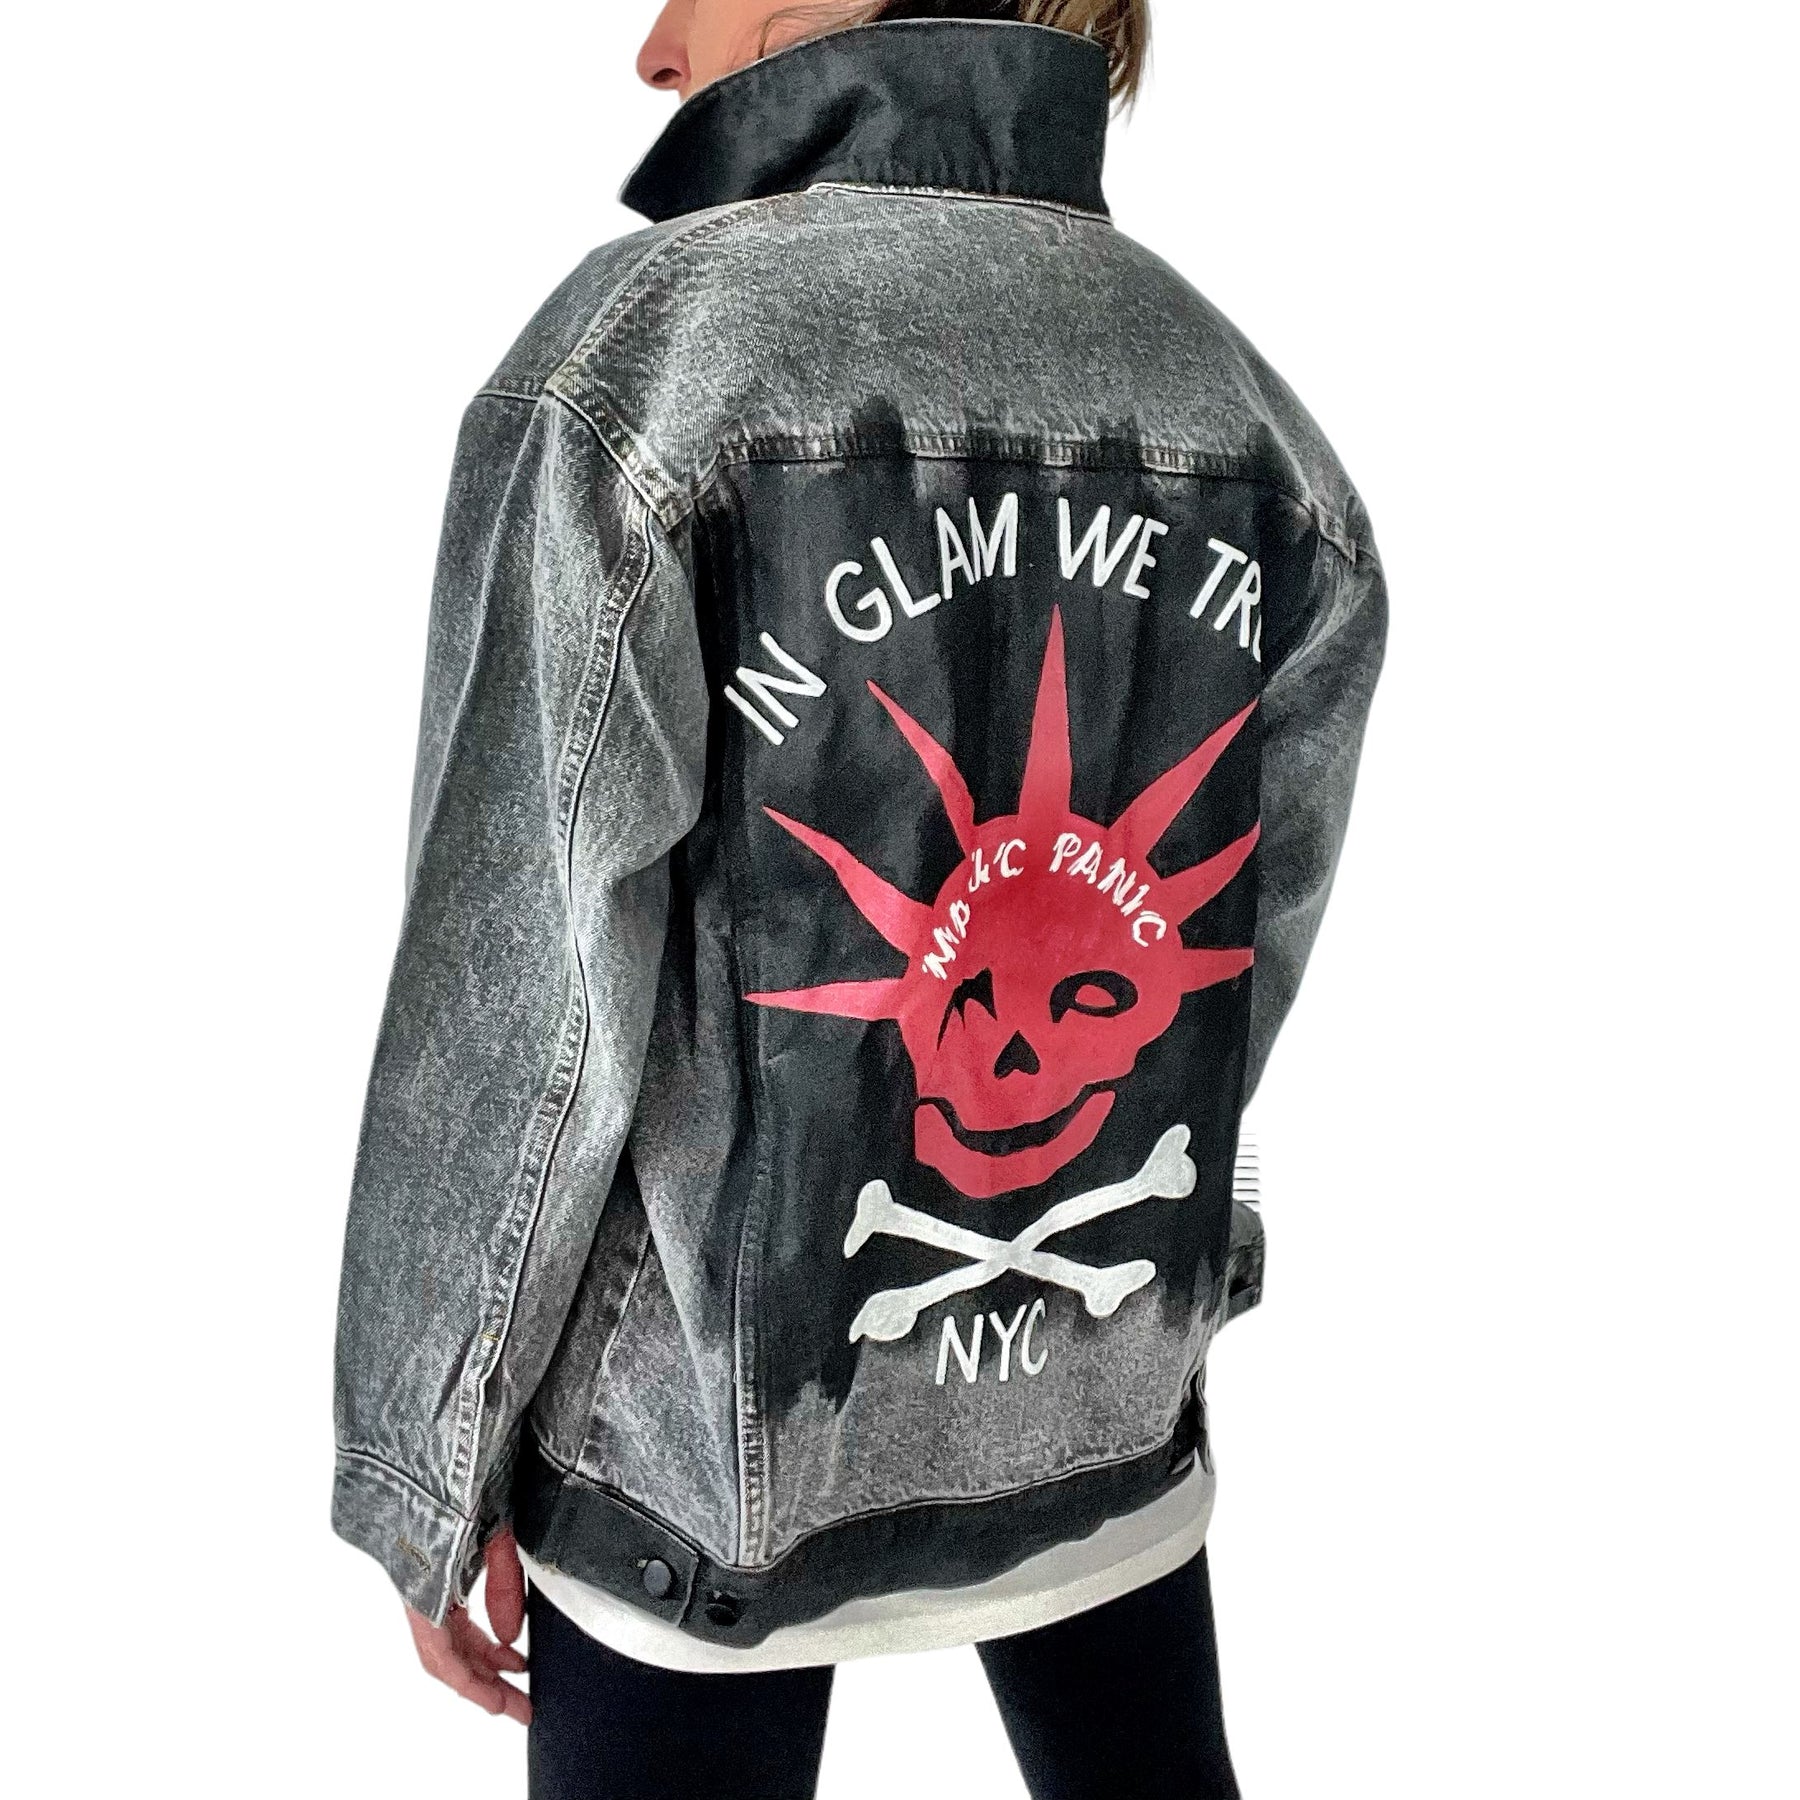 'Trust The Glam' Denim Jacket